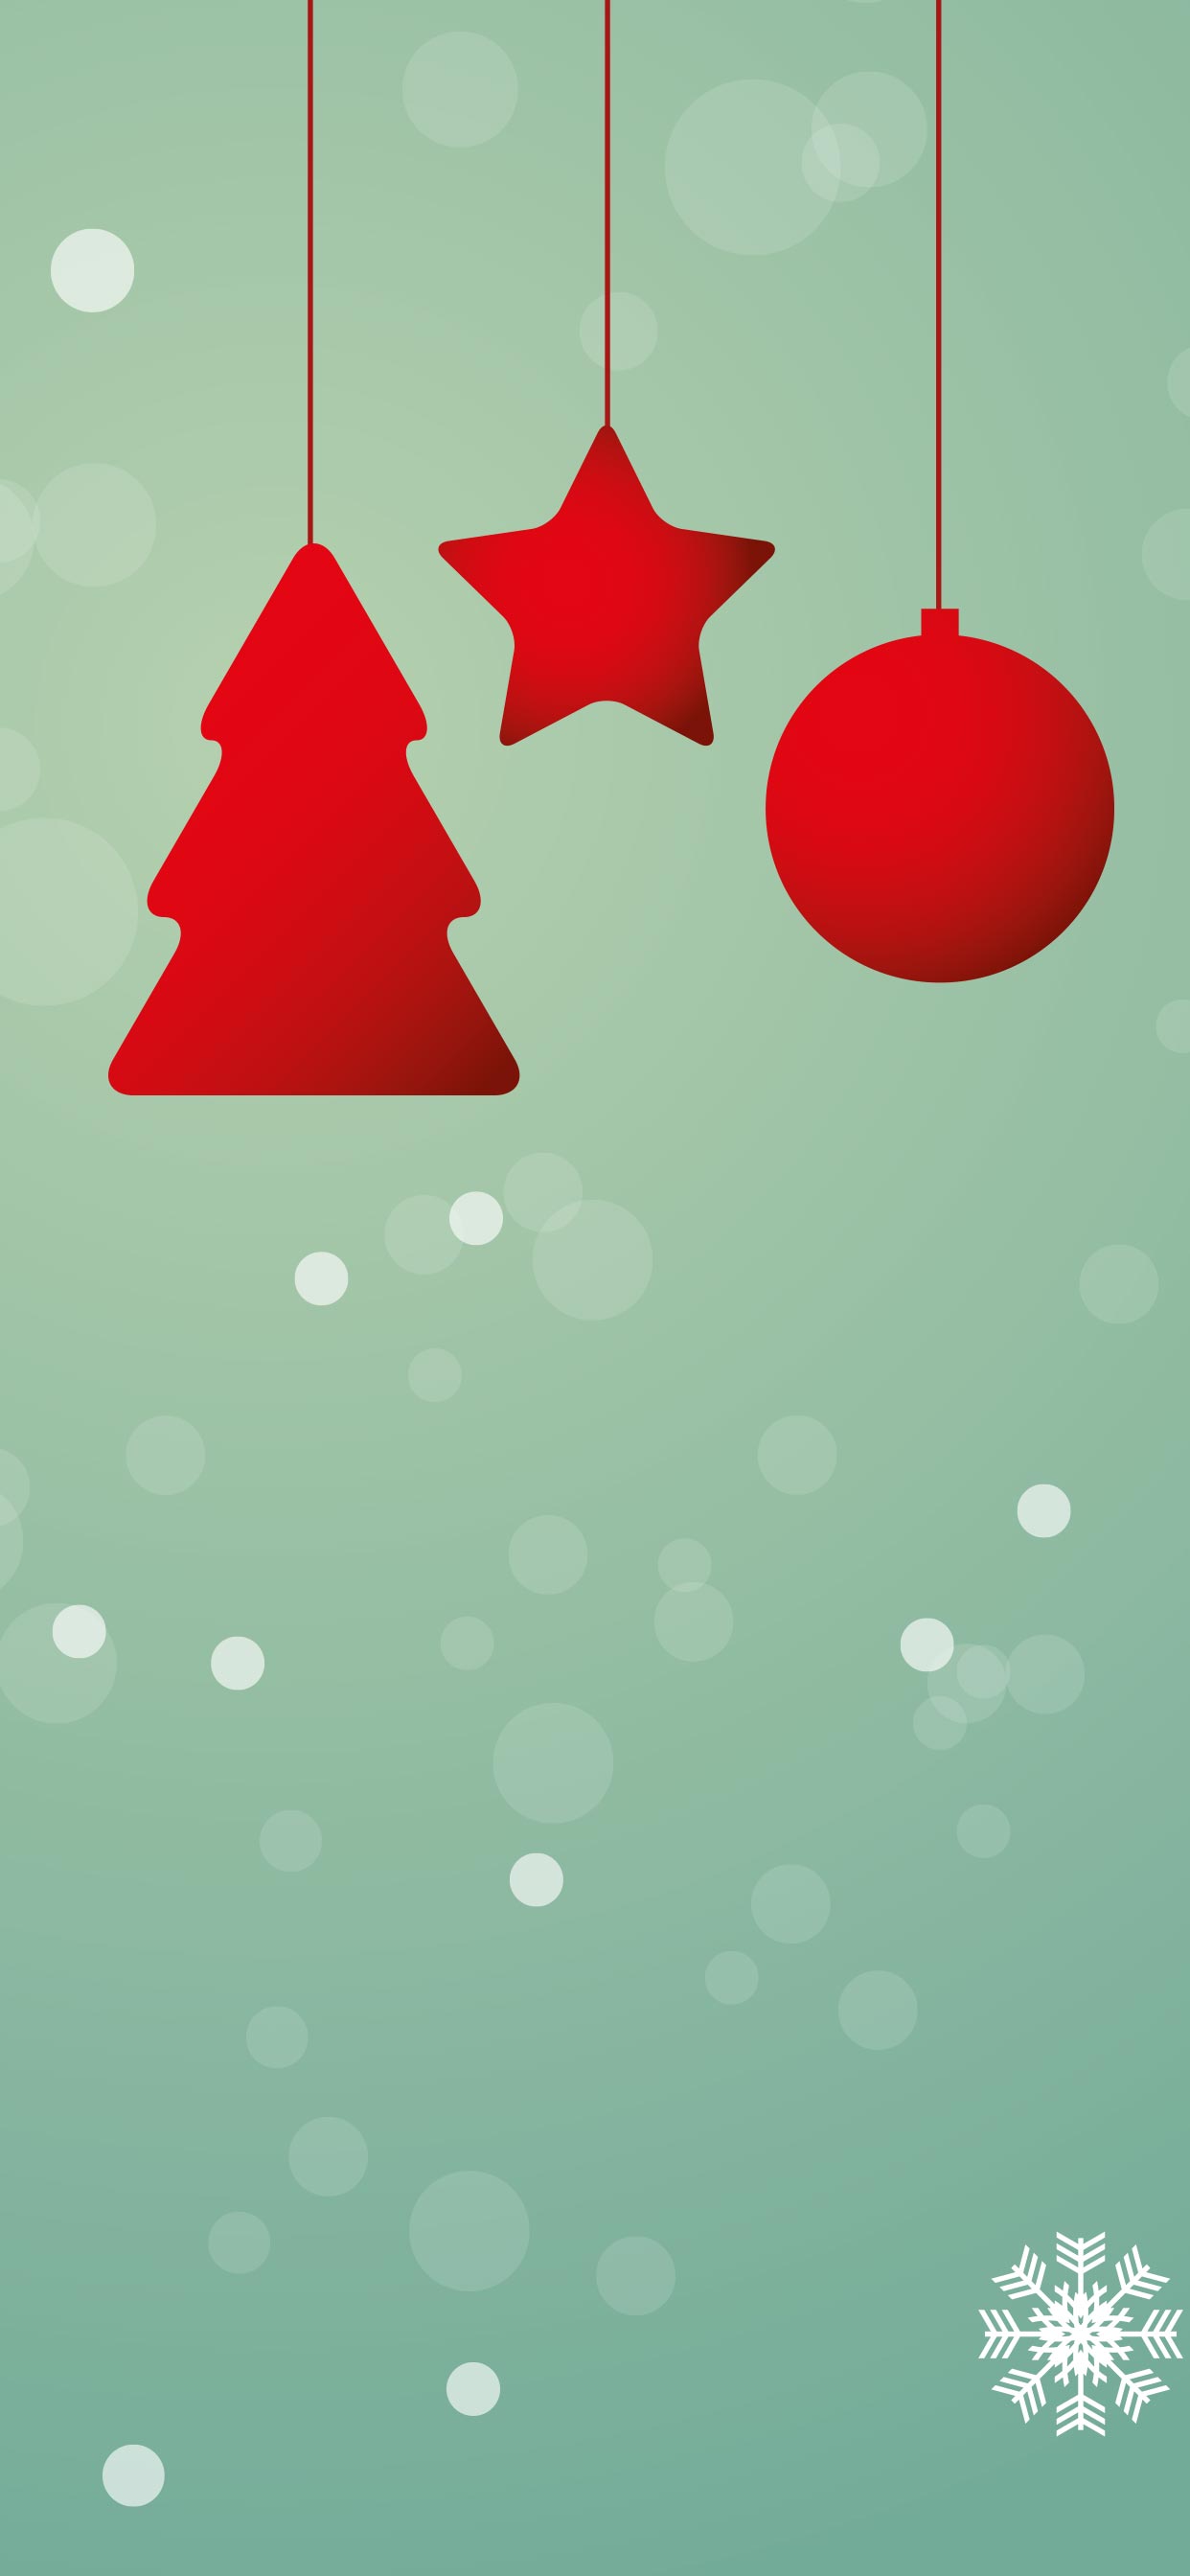 Best Of Wallpaper Iphone 11 Pro Max Christmas wallpaper